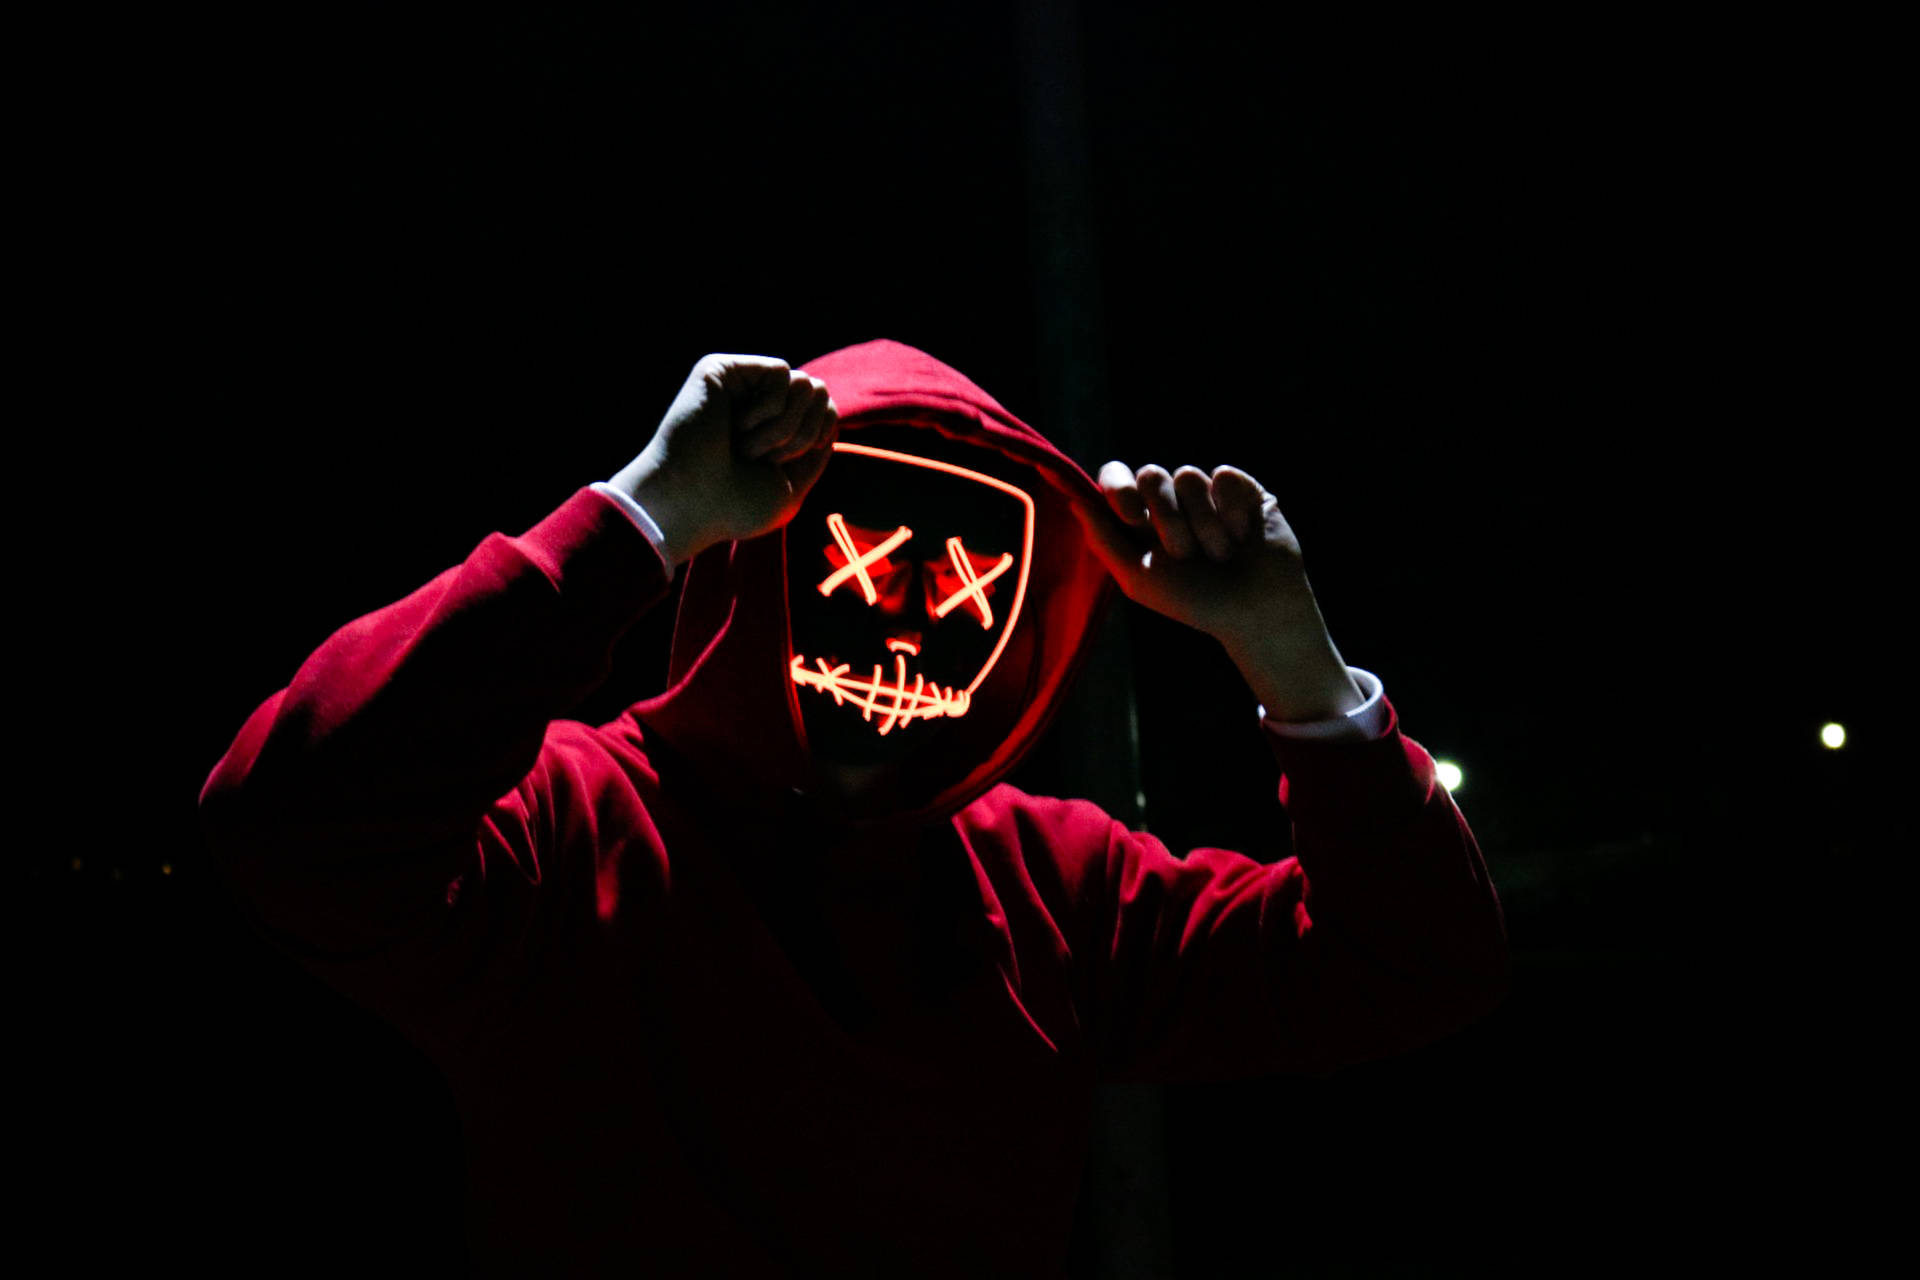 Caption: Enigmatic Figure In Dark Red Hoodie Background